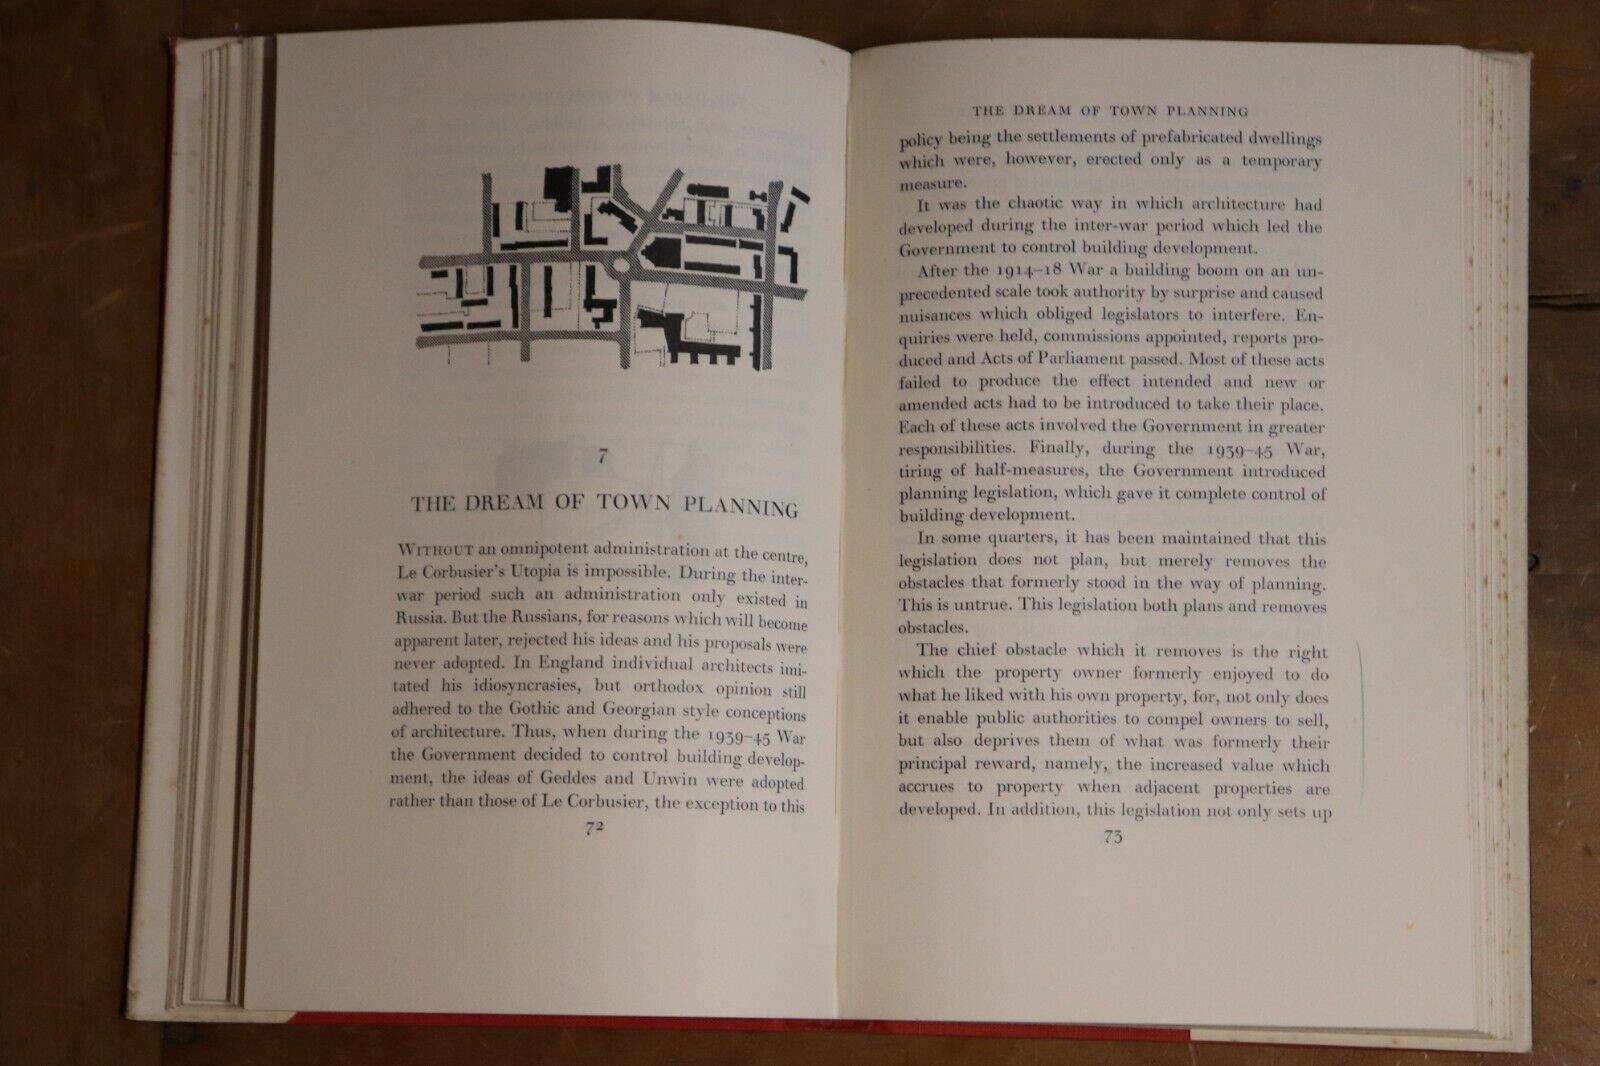 Form & Reform In Architecture - 1954 - 1st Edition Antique Architecture Book